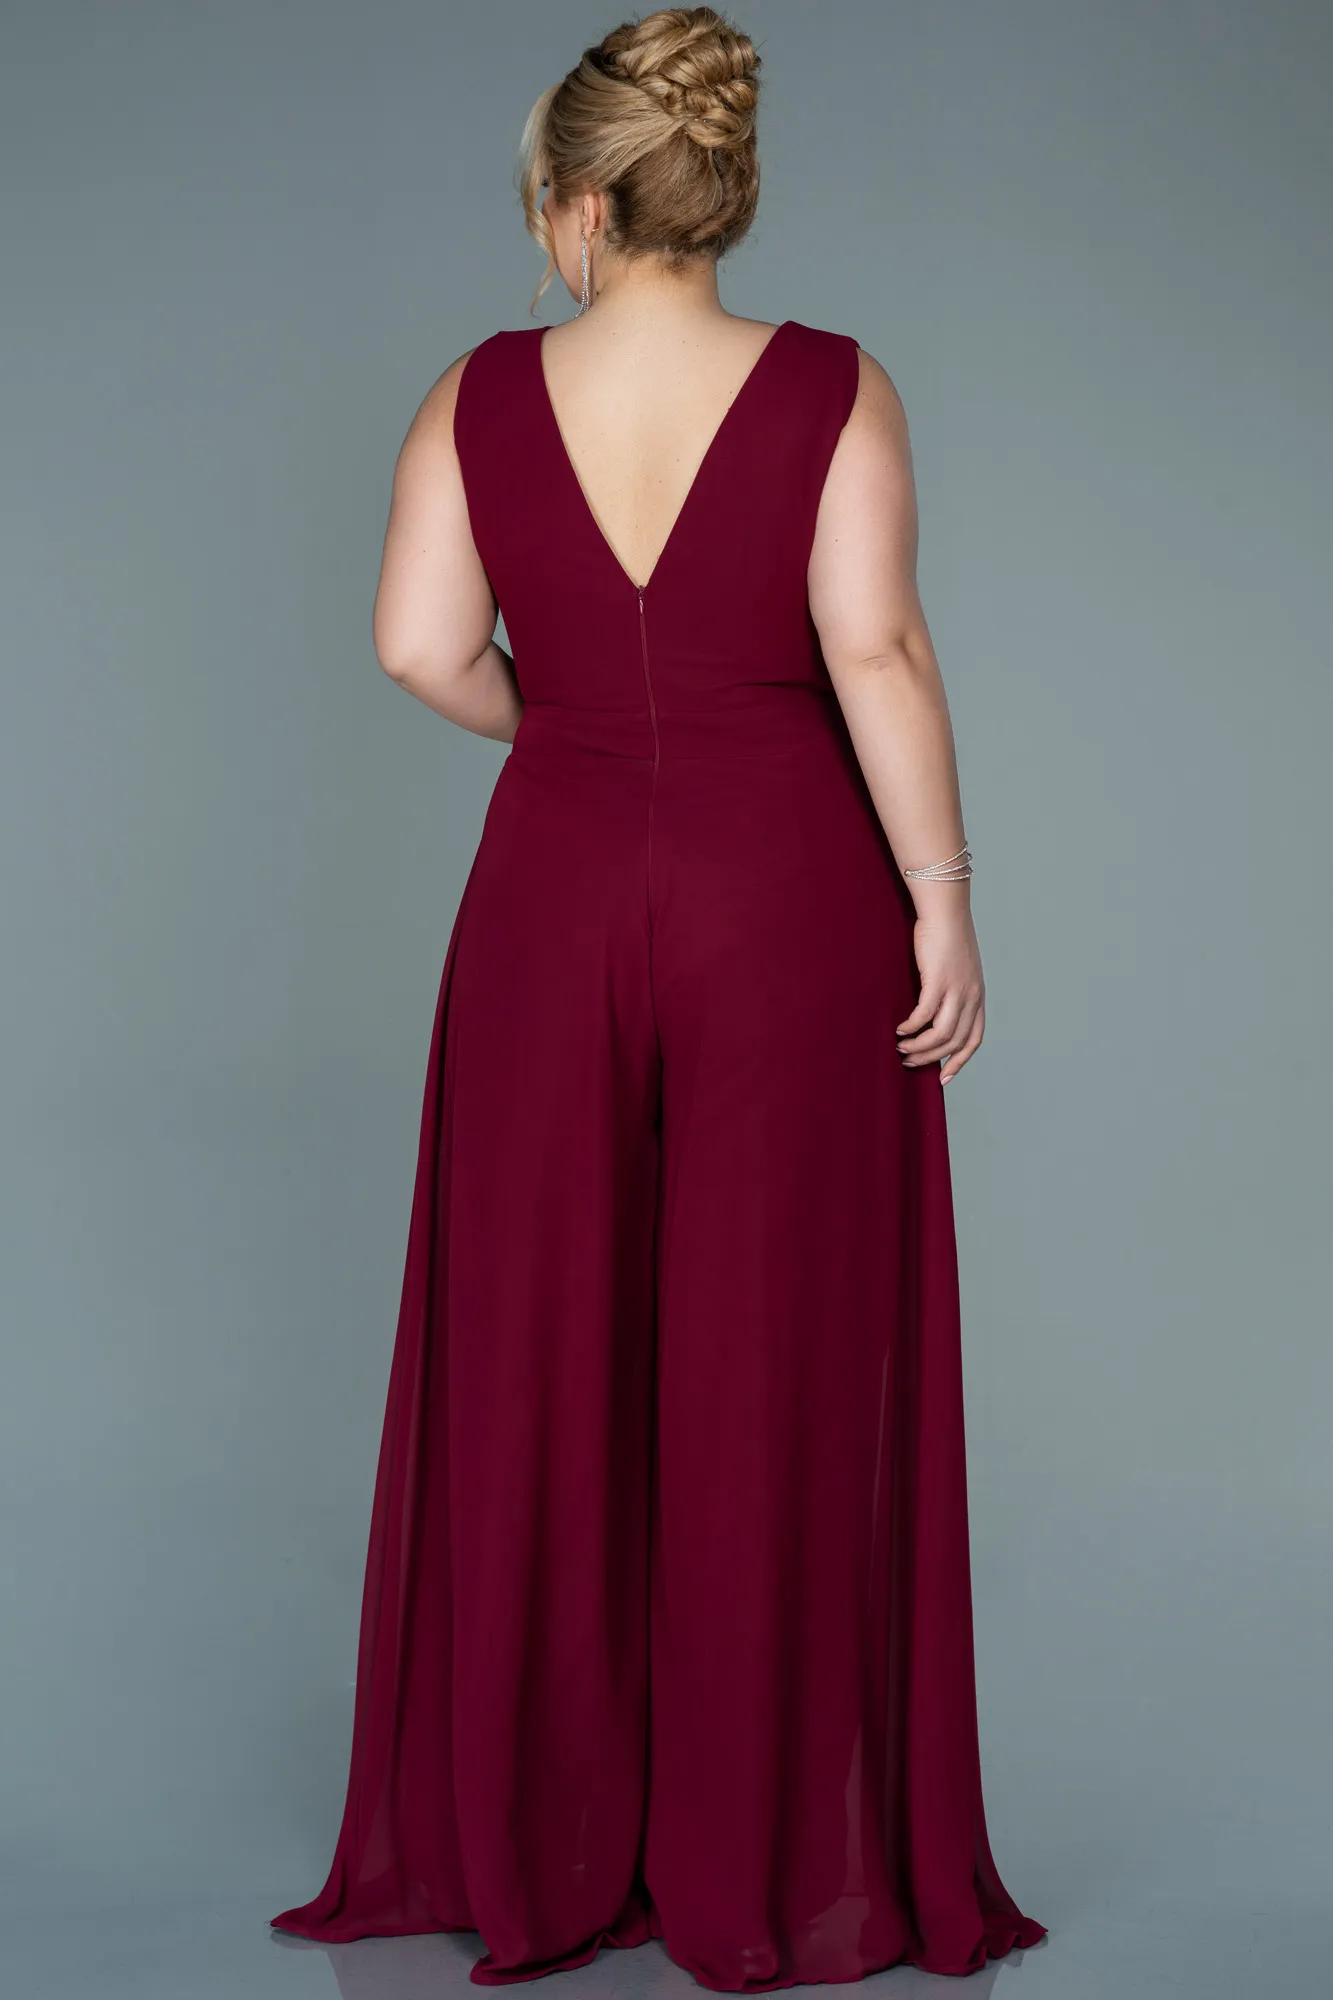 Burgundy-Chiffon Plus Size Evening Dress ABT082